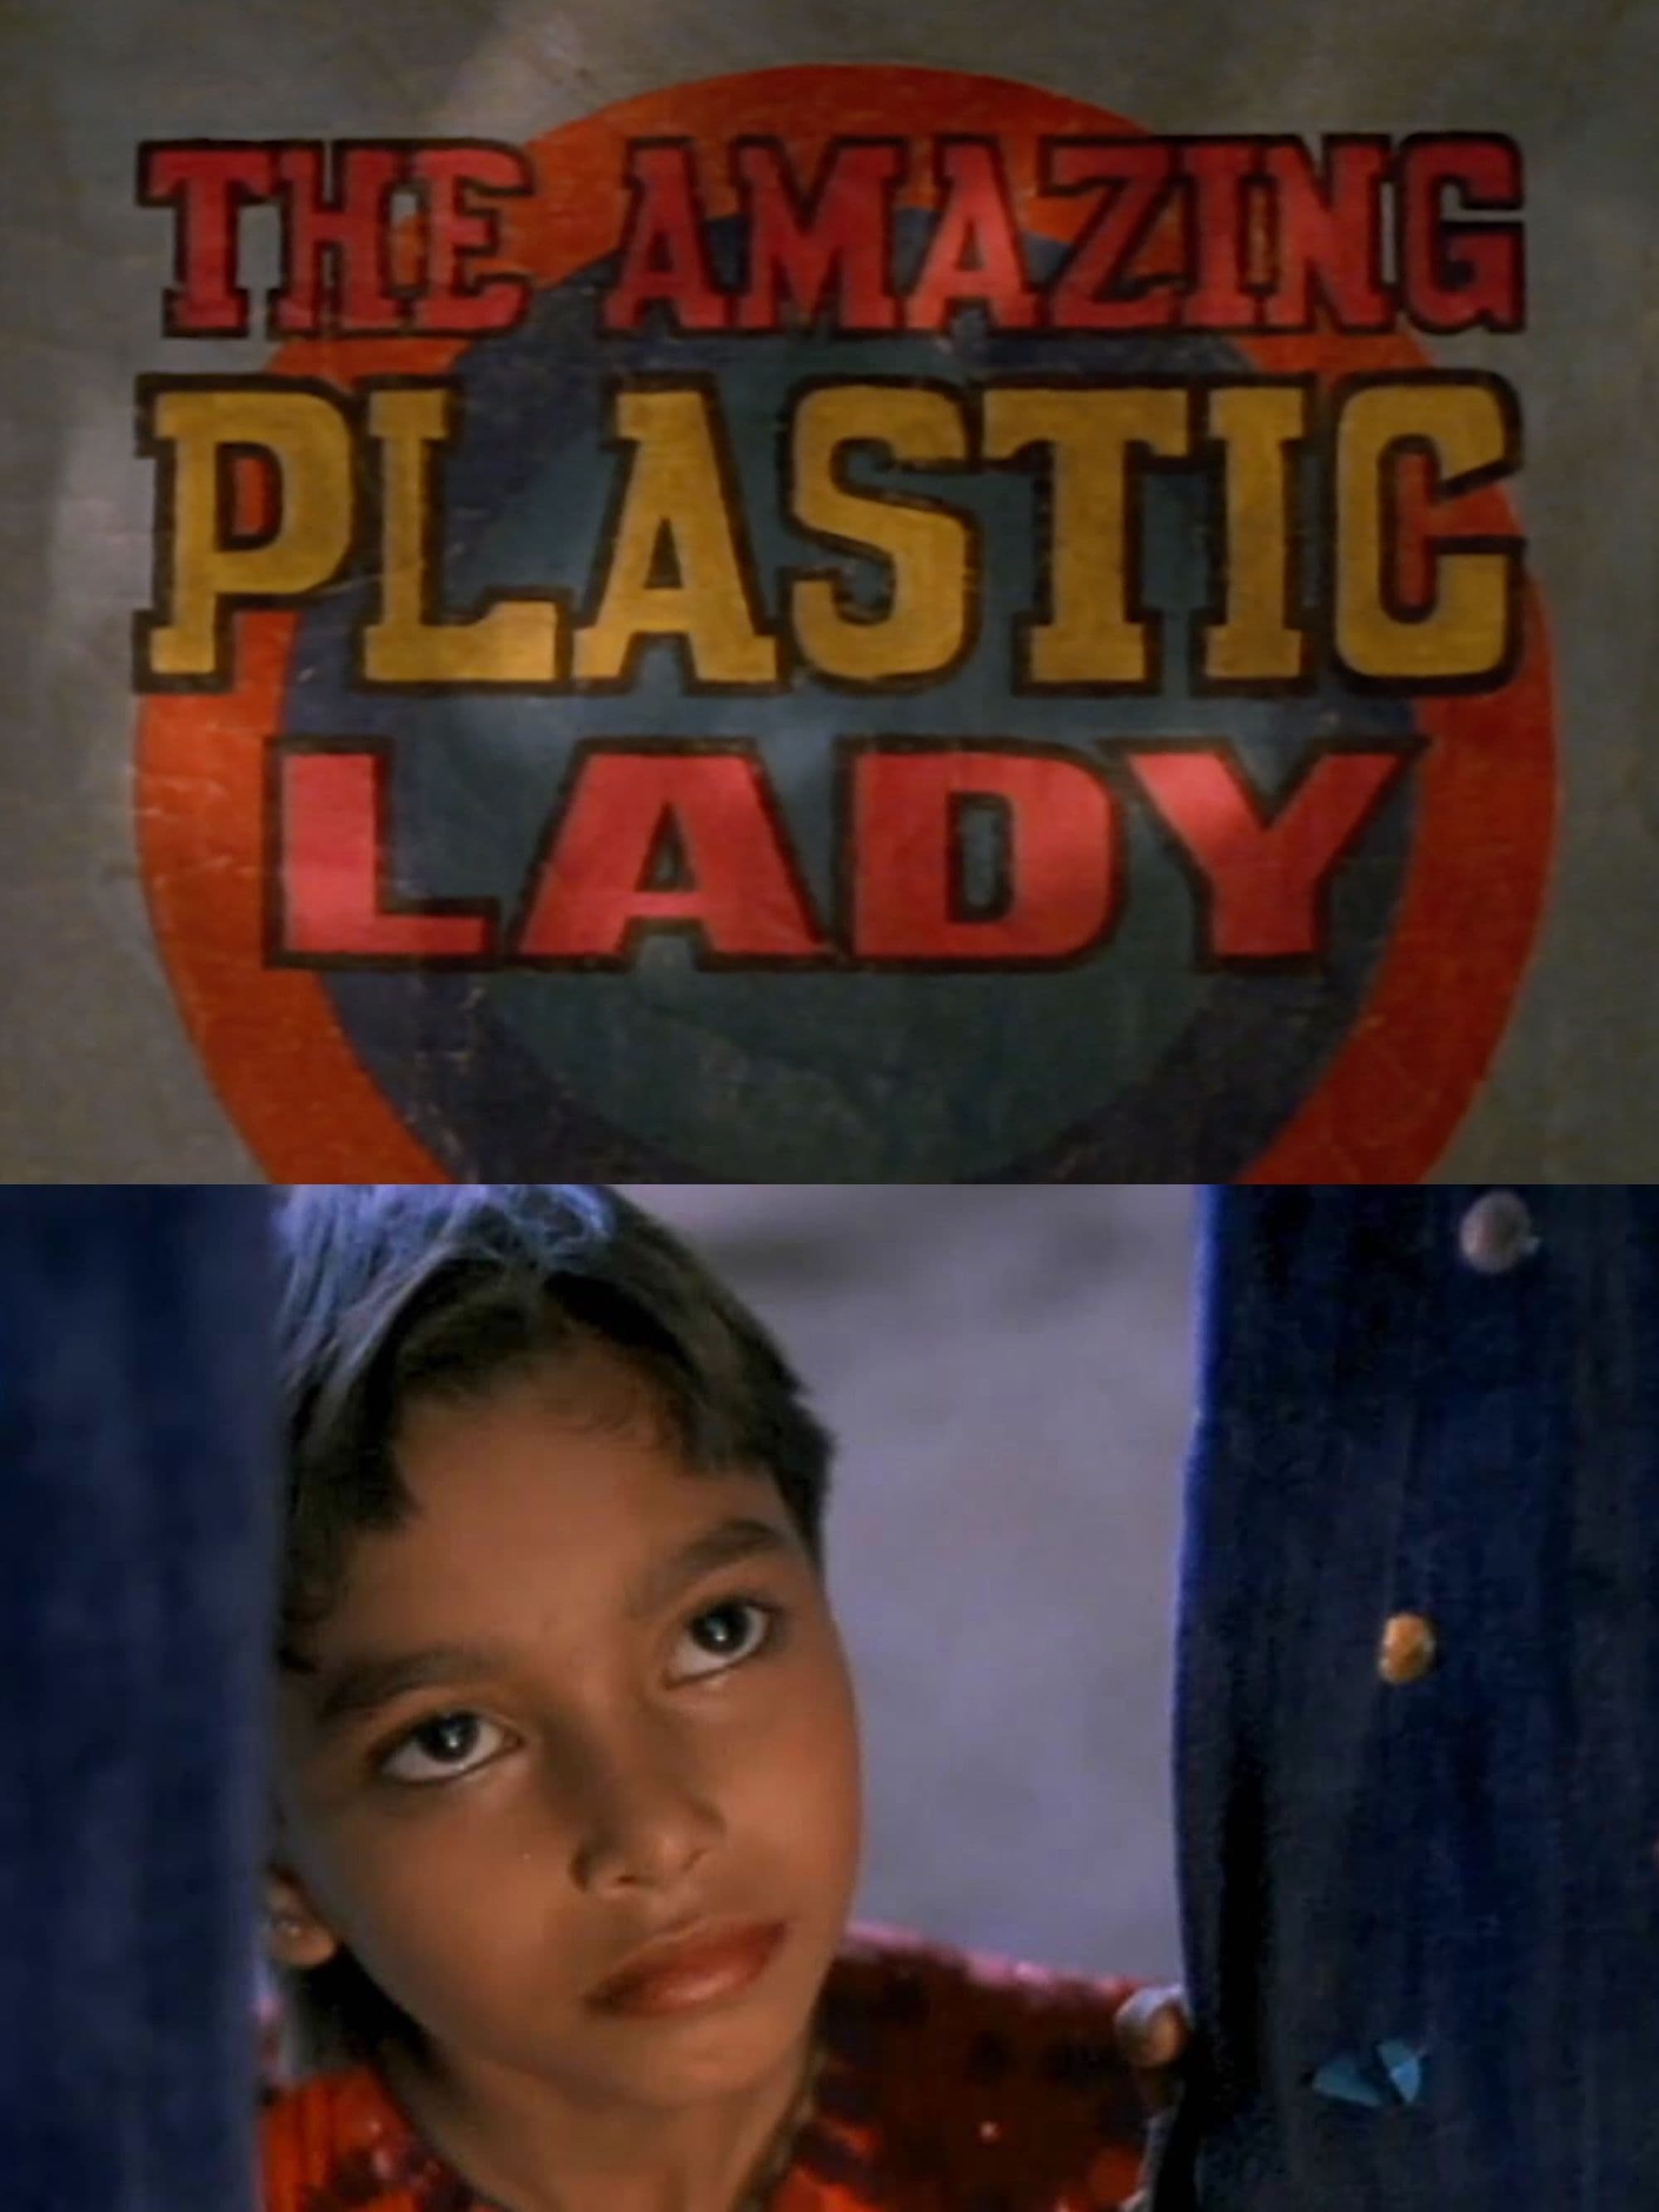 The Amazing Plastic Lady